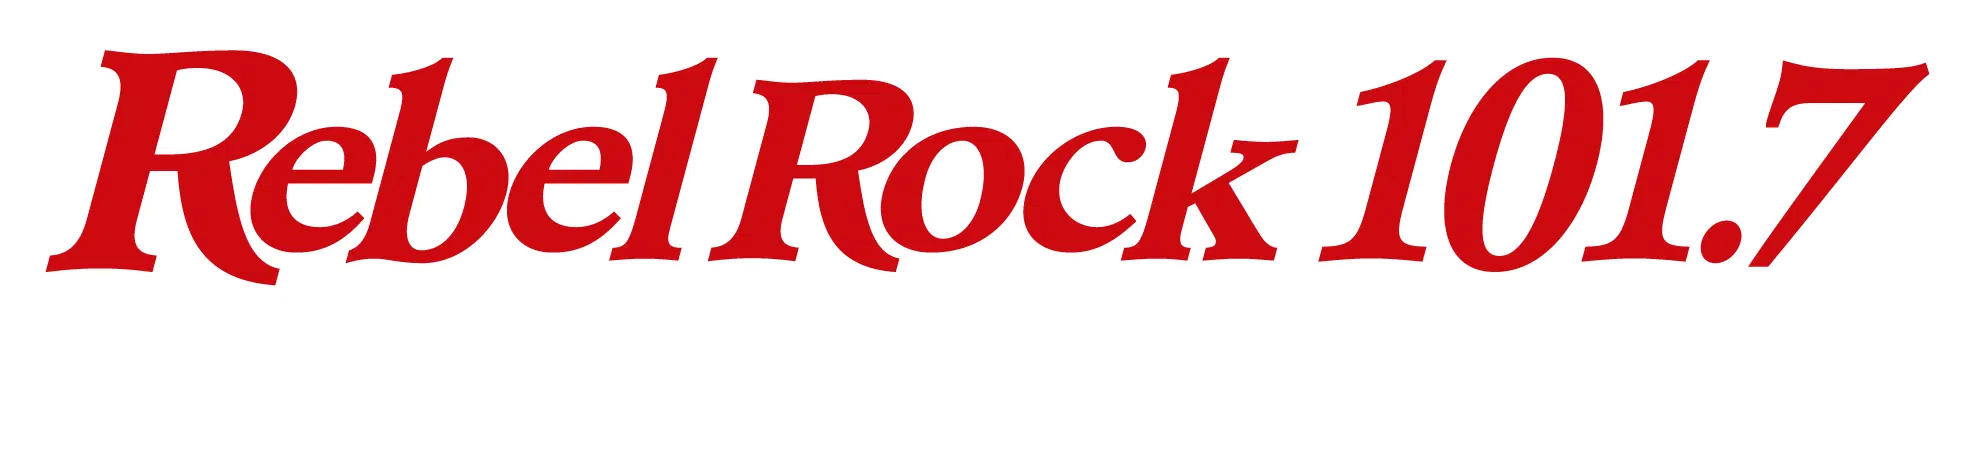 CIDG-FM “Rebel Rock101.7” Ottawa, ON